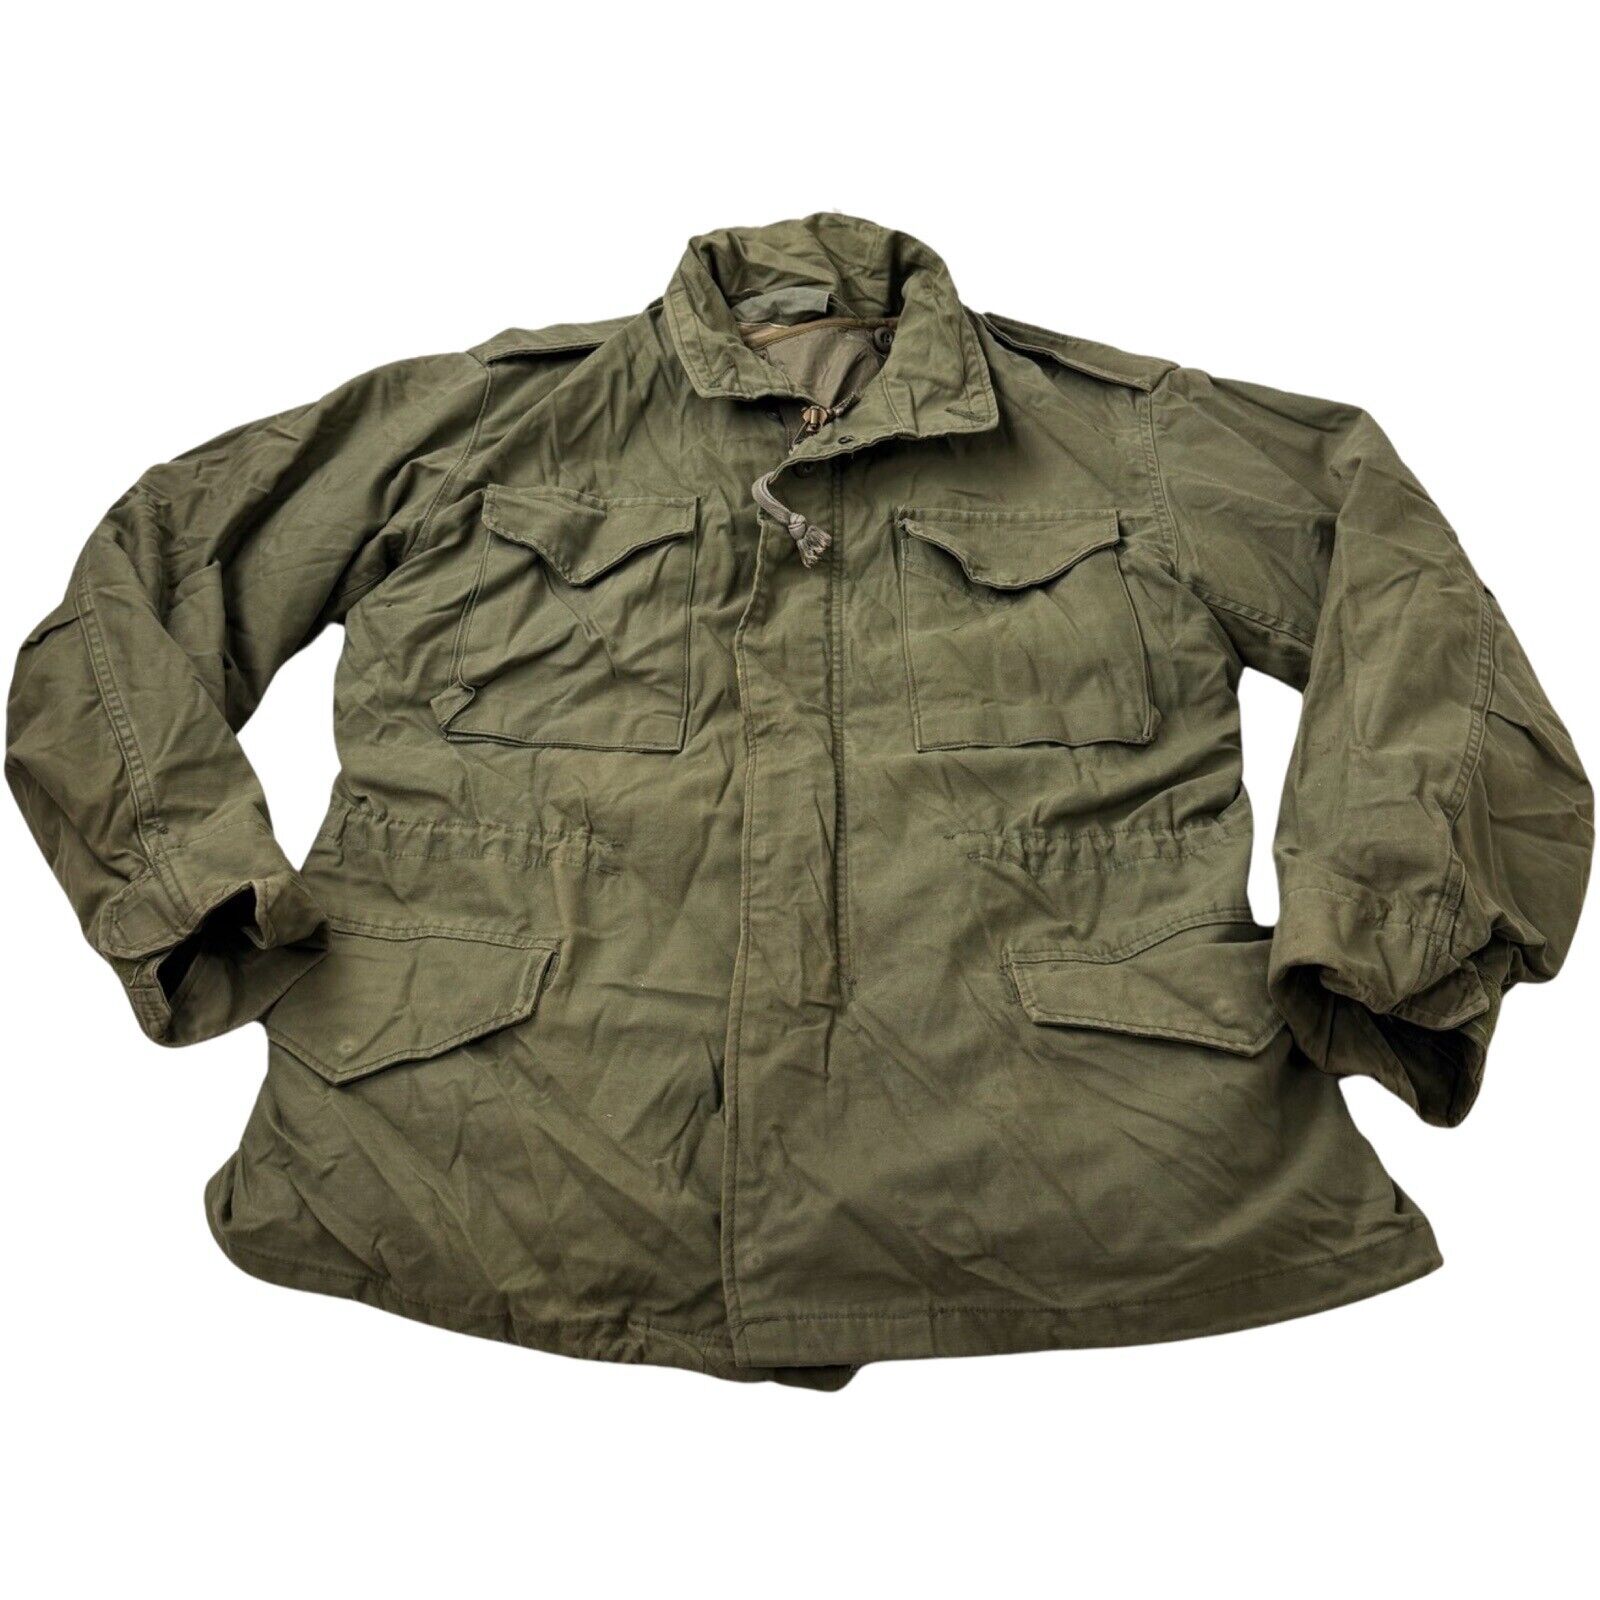 Vintage Military Og 107 Field Coat Jacket Lined Medium 1950’s Vietnam Era